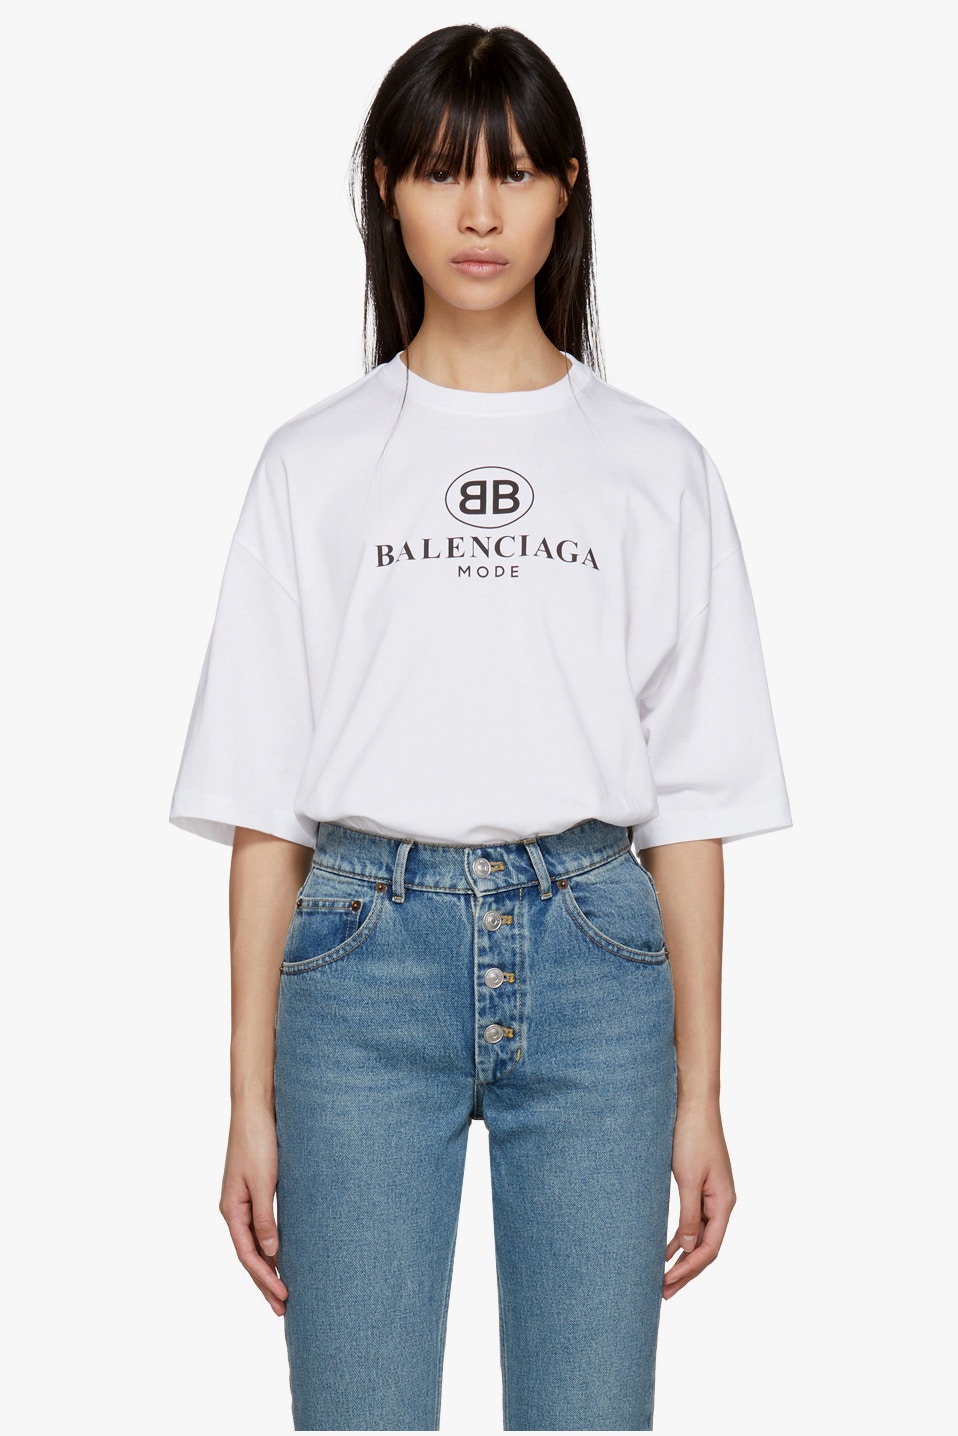 Balenciaga TShirts  Jersey Shirts for Women  Shop on FARFETCH